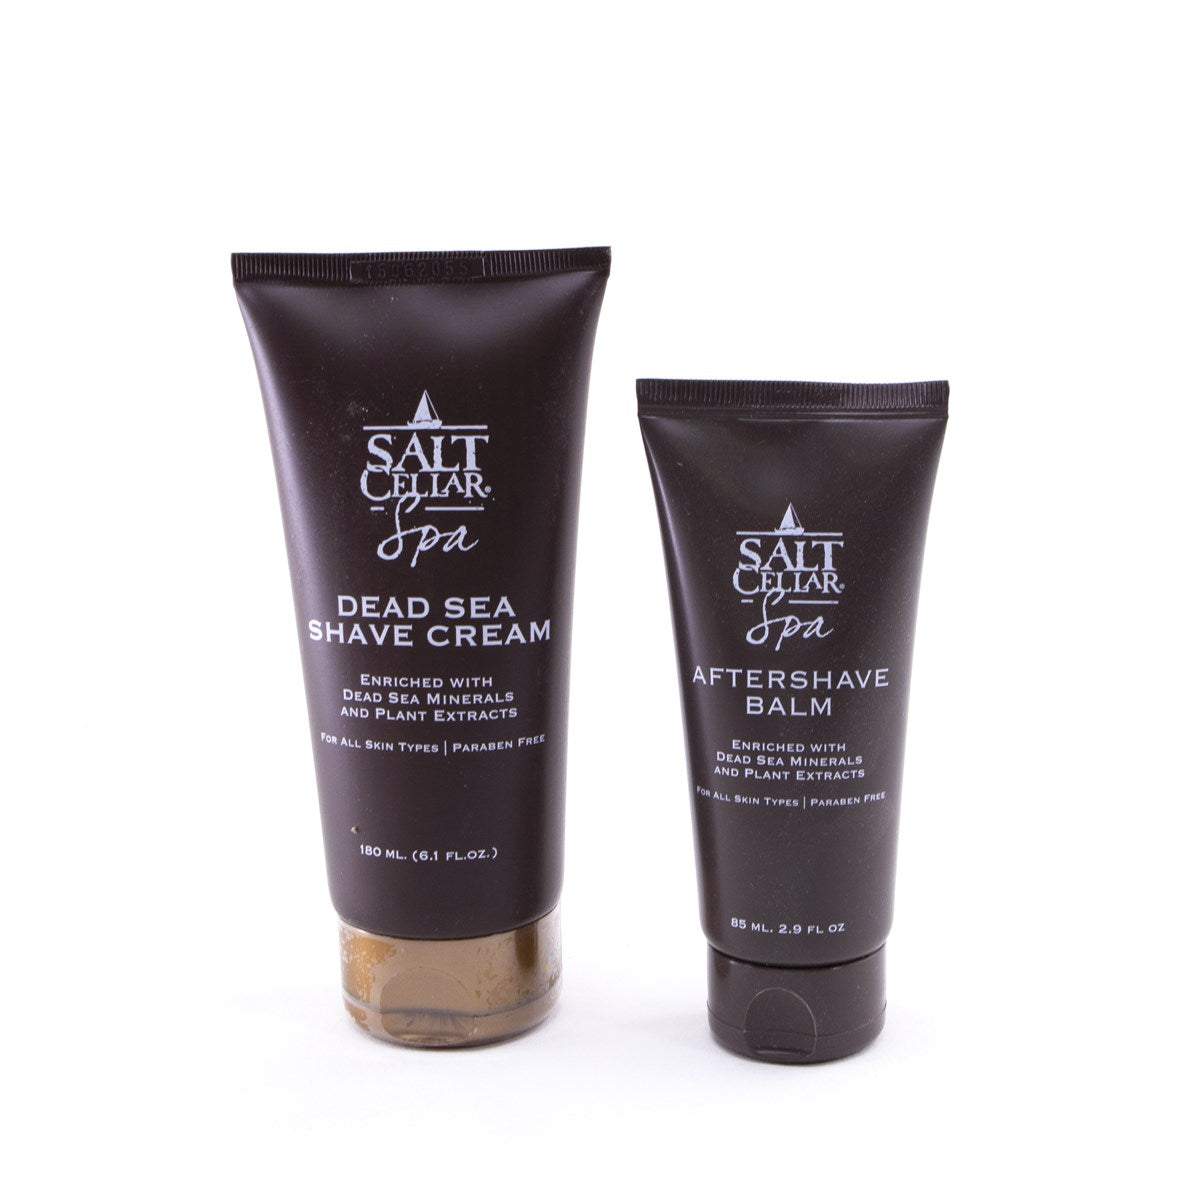 Salt Cellar Dead Sea Shave Cream-Salt Cellar-Bath and Body_Men,BB_Bath and Shower,Brand_Salt Cellar,Collection_Bath and Body